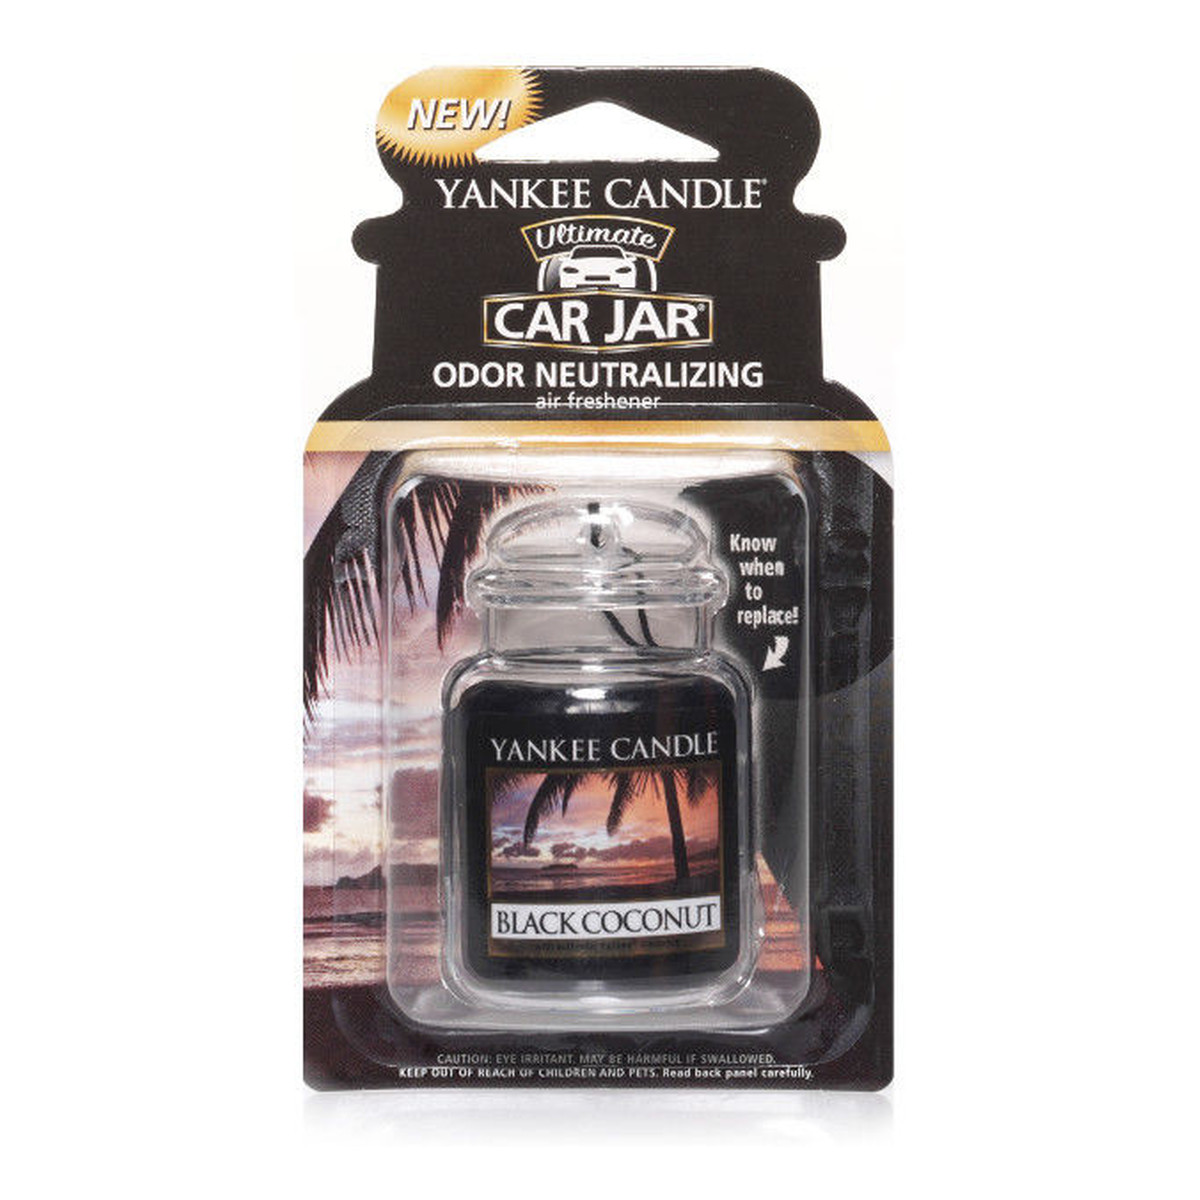 Yankee Candle Car Jar Ultimate zapach samochodowy Black Coconut 1szt